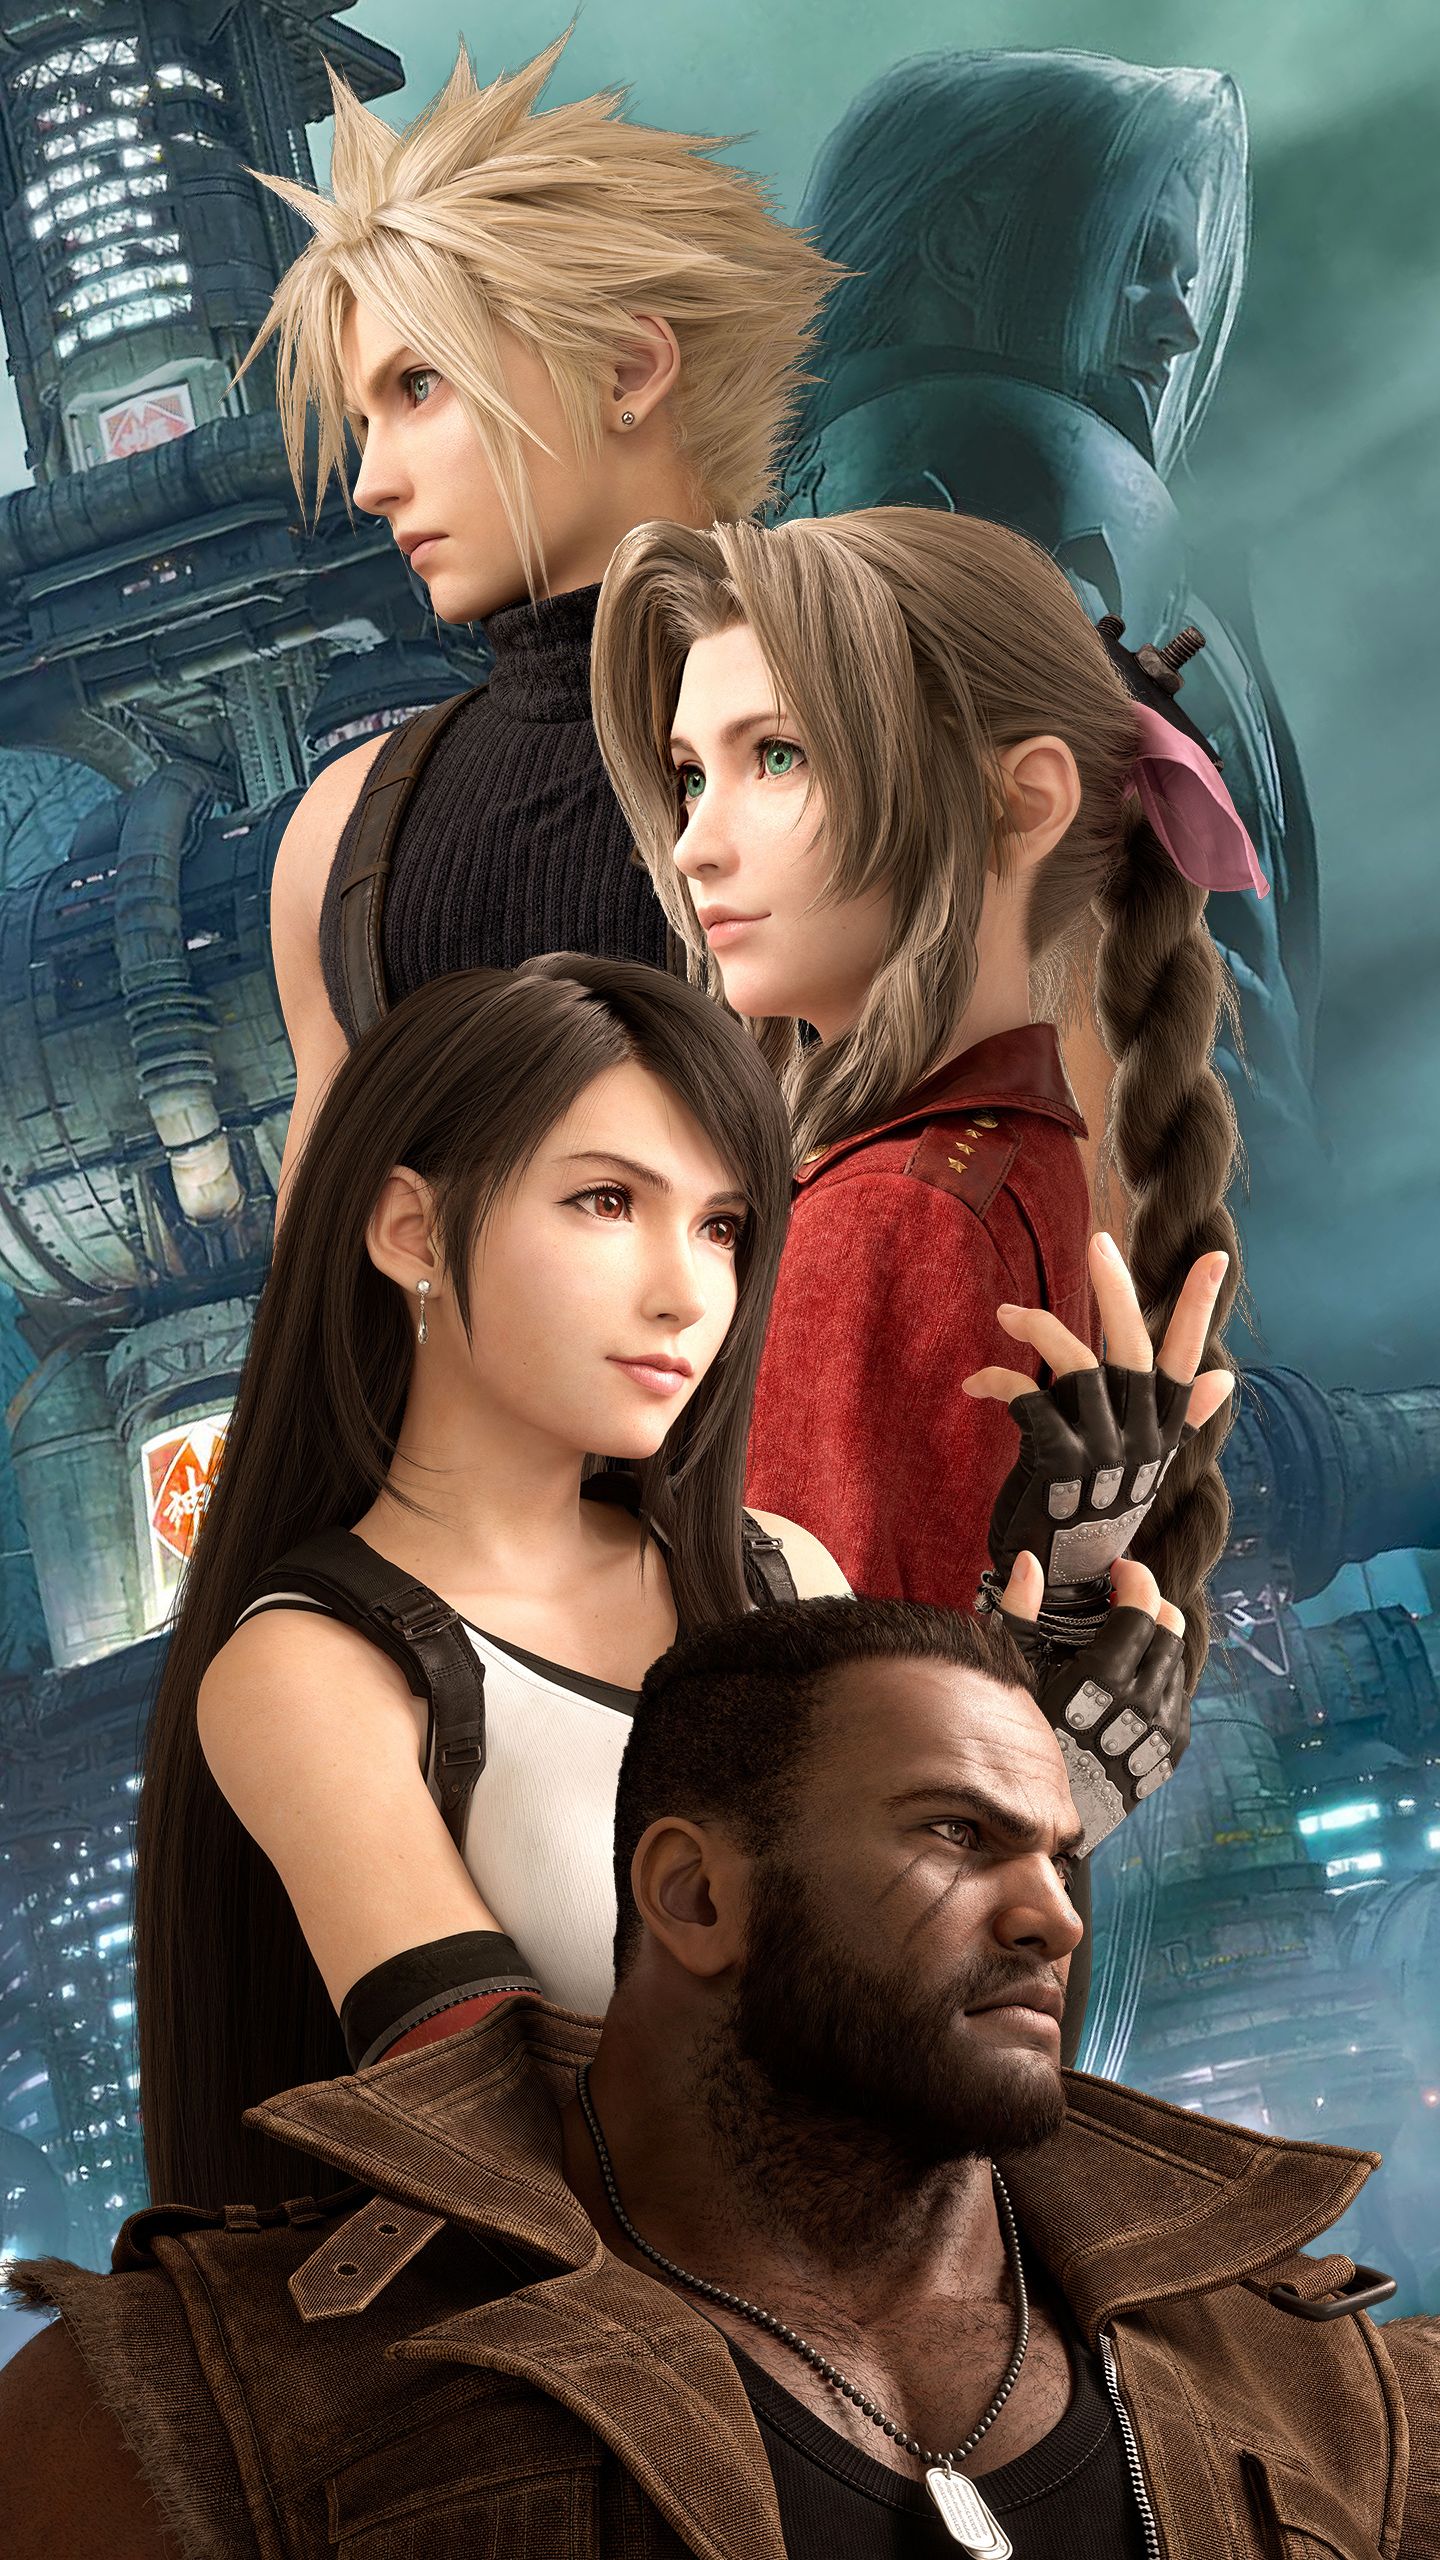 Final Fantasy VII Remake Wallpapers | HD Background Images ...